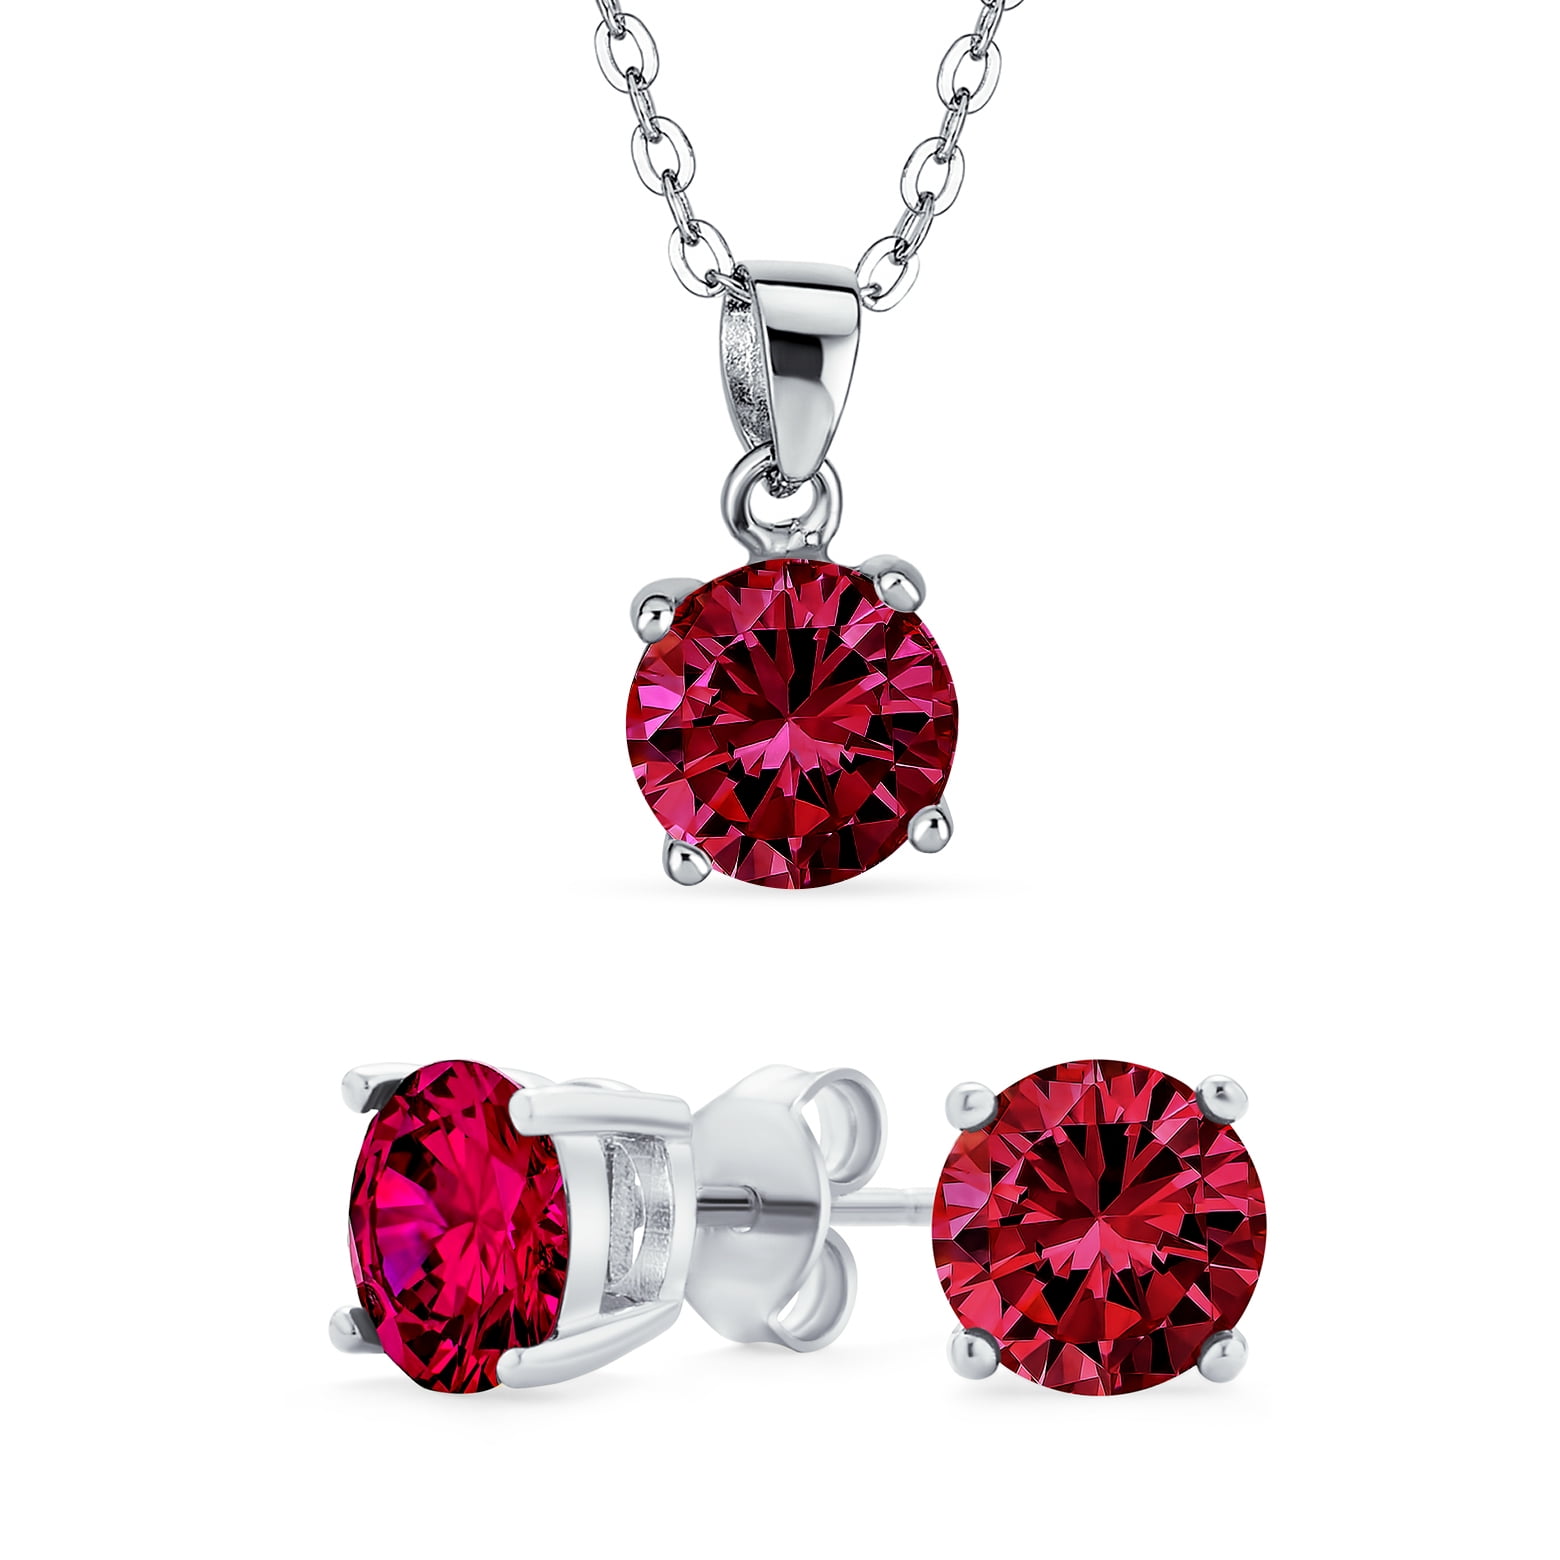 Red Carnelian Stone,Silver Pendant Red Onyx Pendant,925 Sterling Silver Simple Minimalist Style Handmade Pendant Women Jewelry Gift Idea